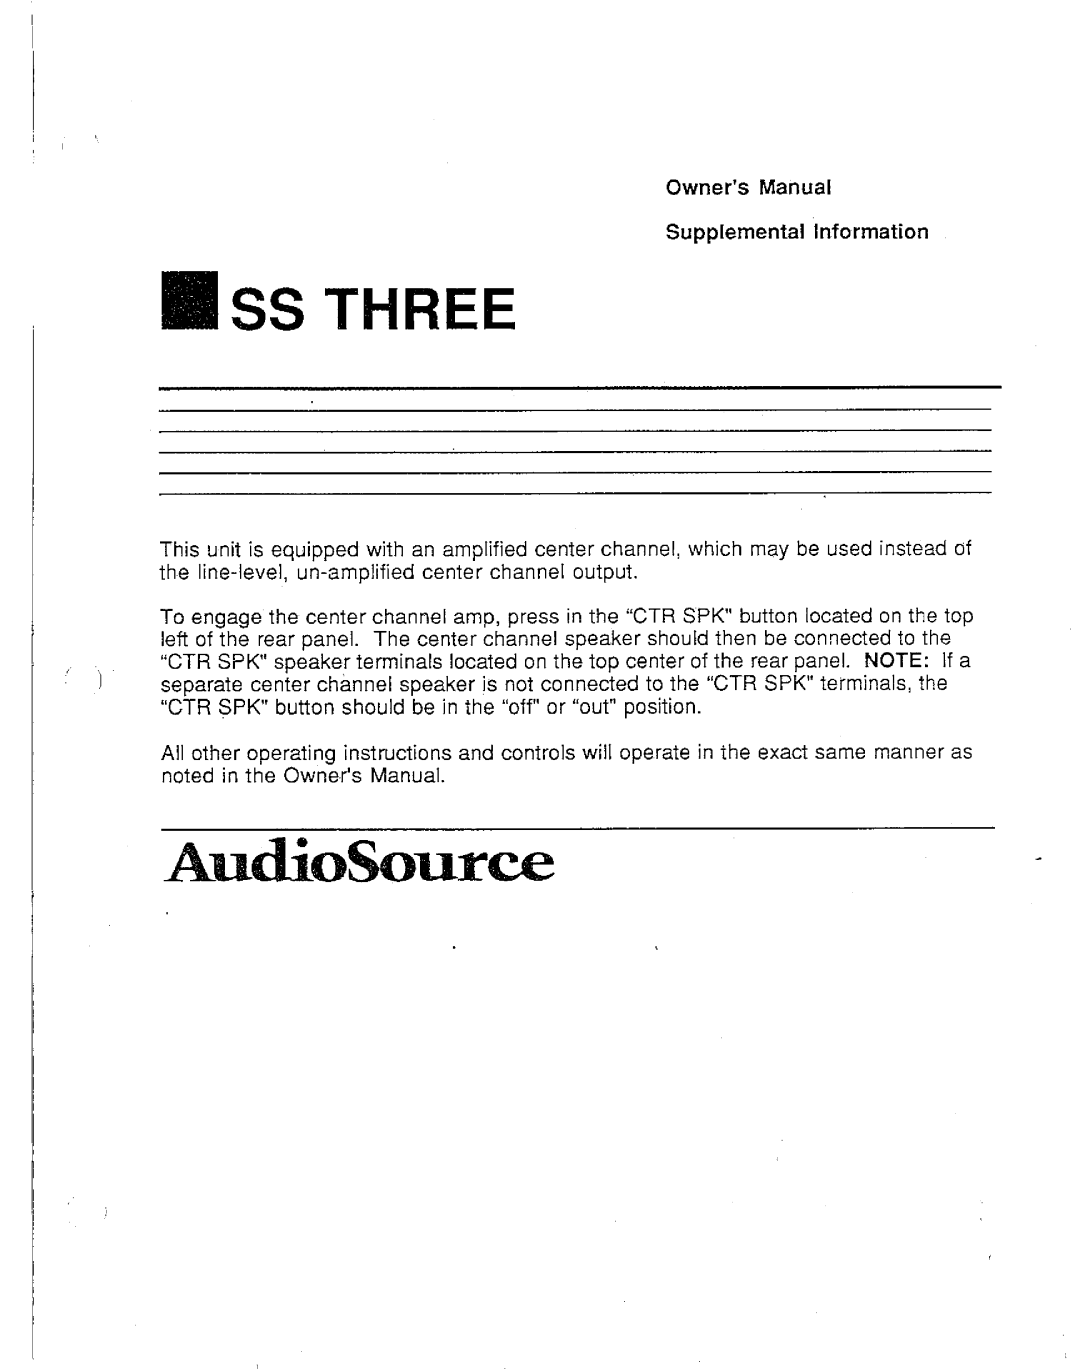 AudioSource Surround Sound Processor, SS THREE manual 